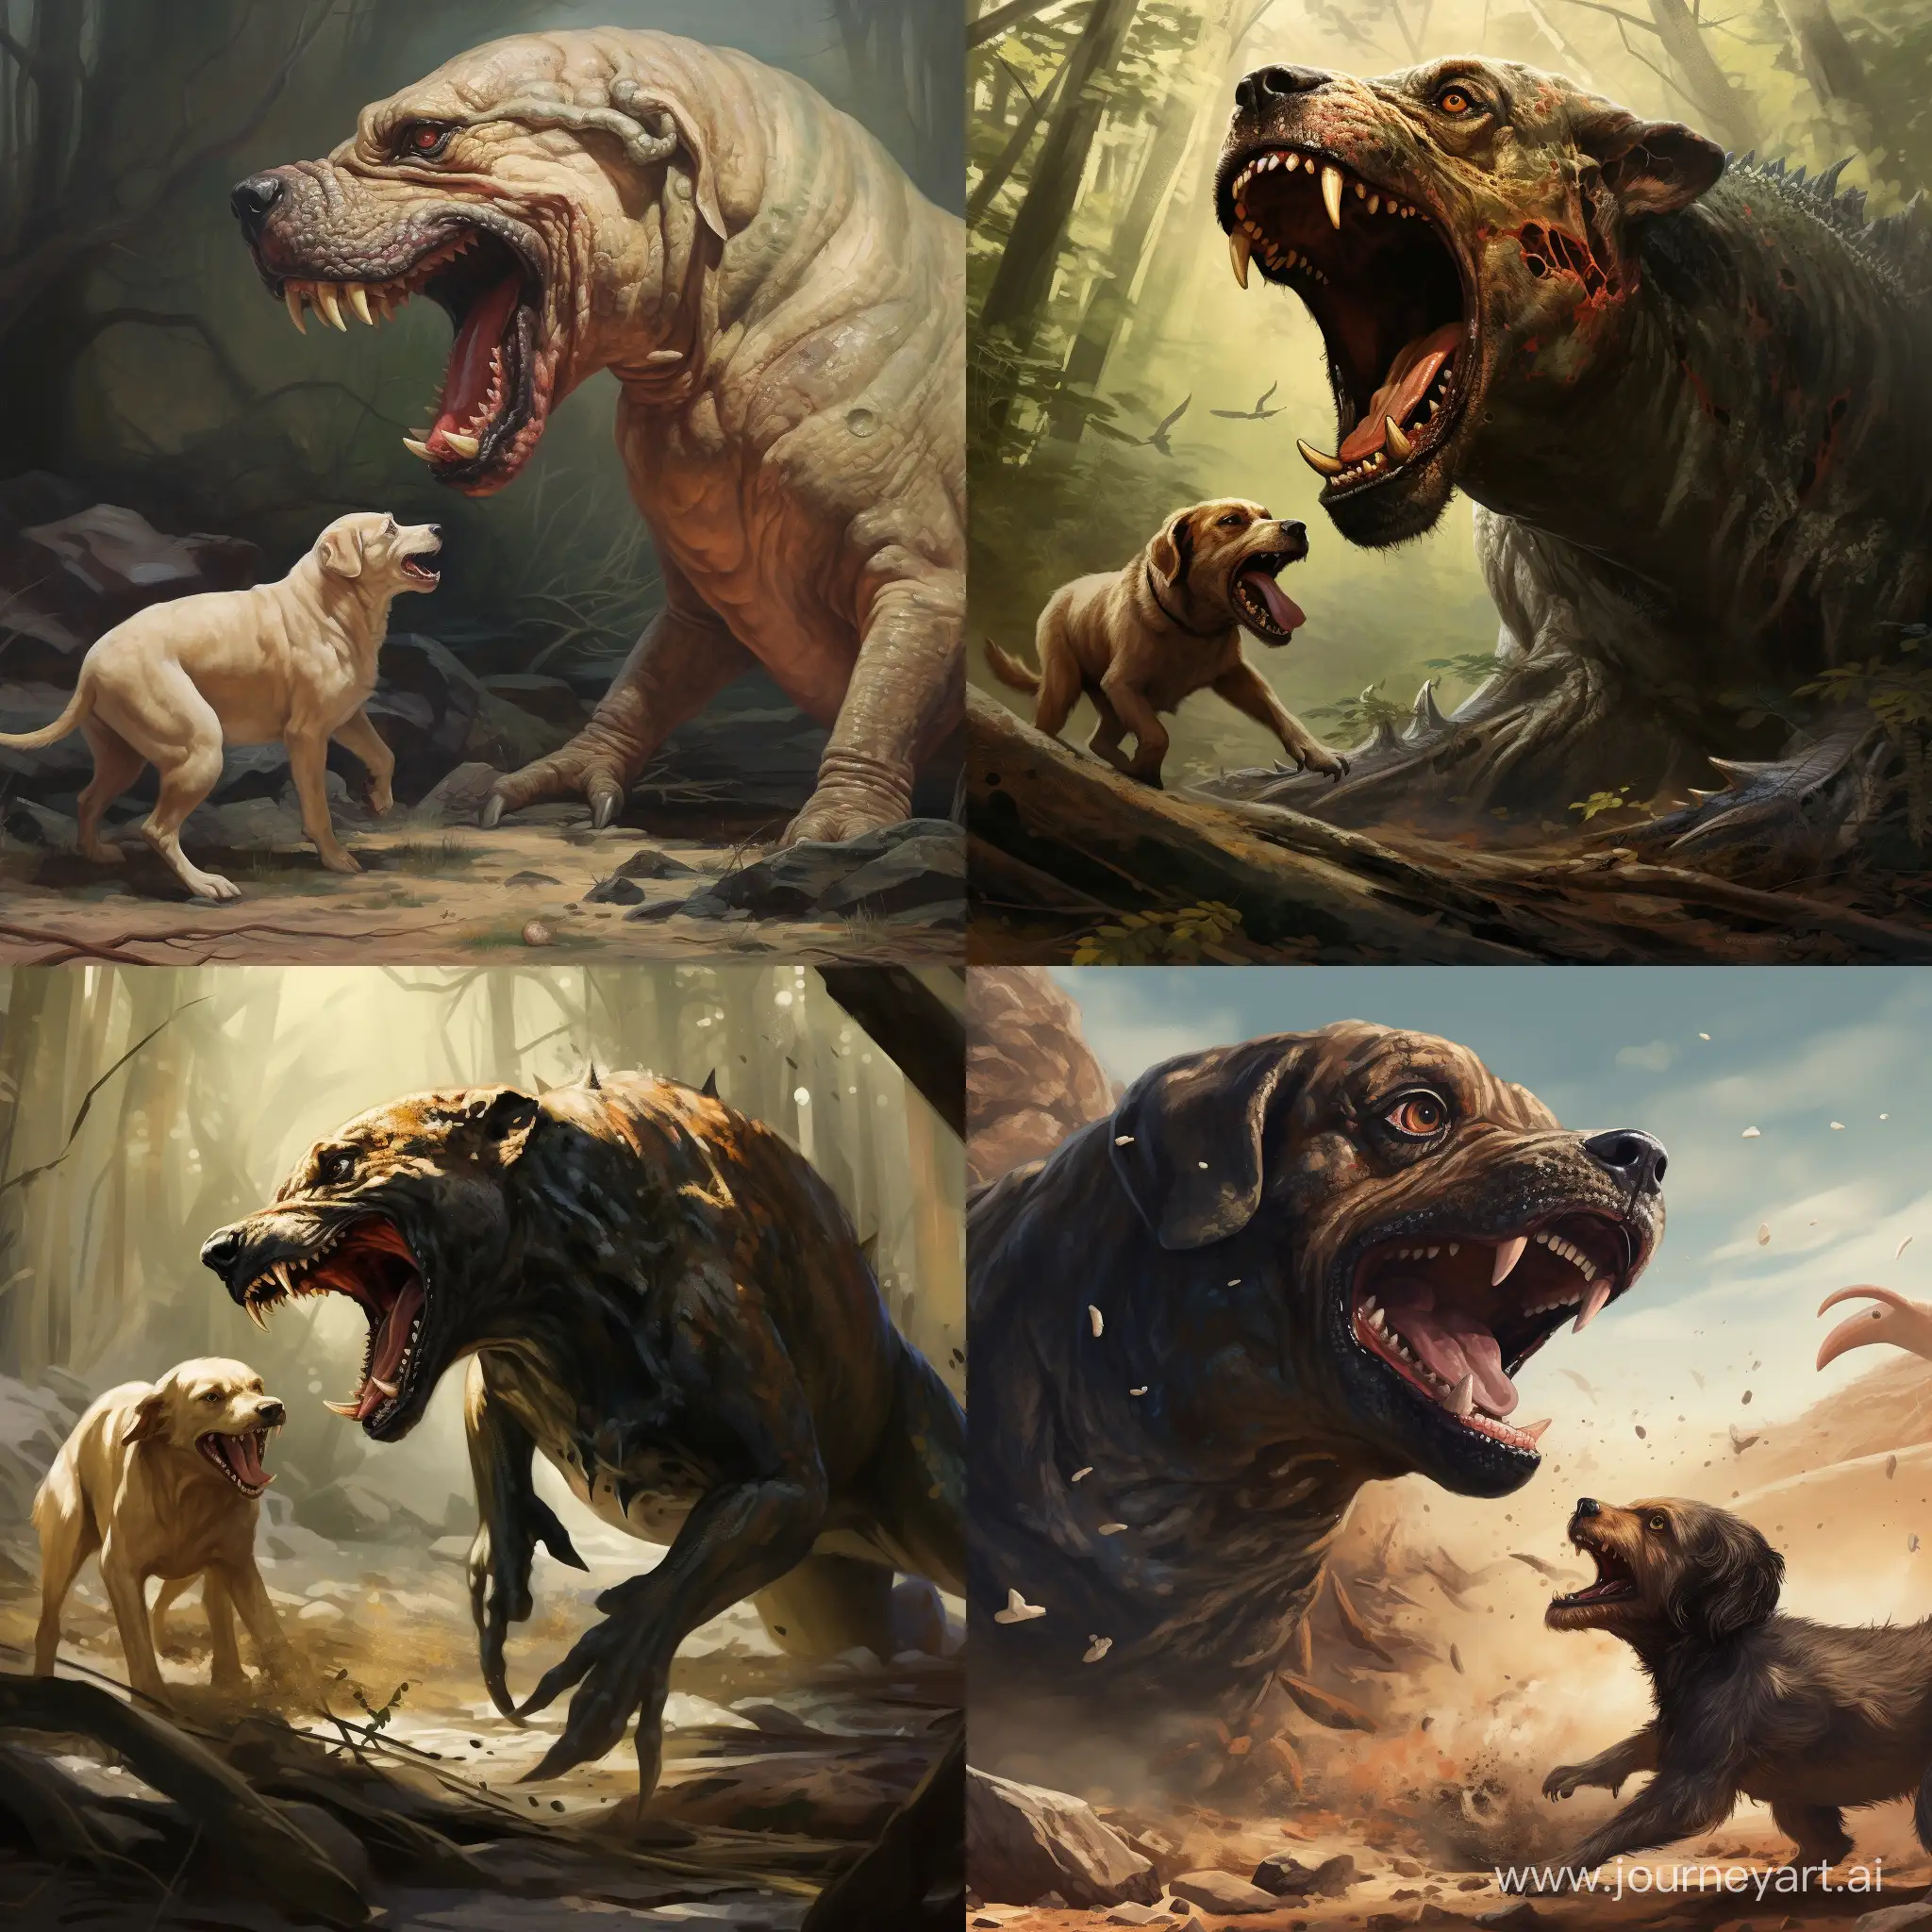 Epic-Battle-Between-Giant-Ferocious-Dog-and-Lizard